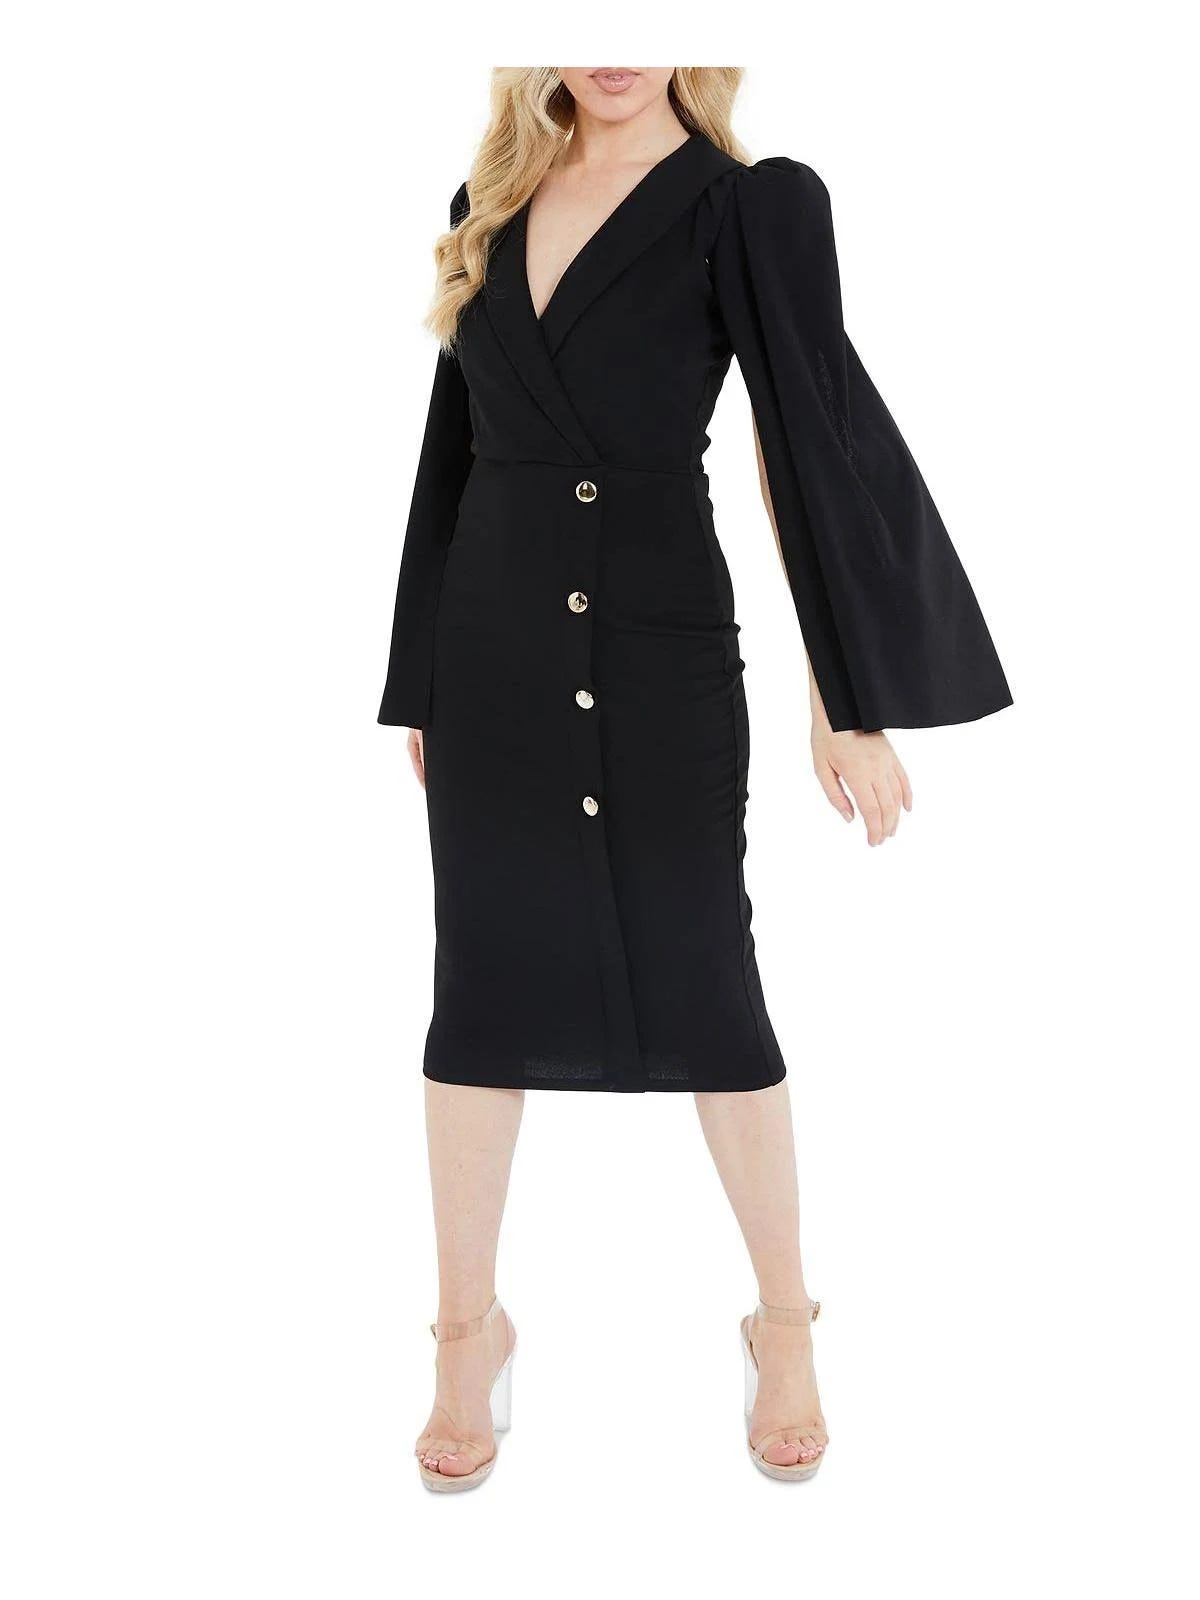 Elegant Black Cape Midi Sheath Dress with Unique Sleeves | Image